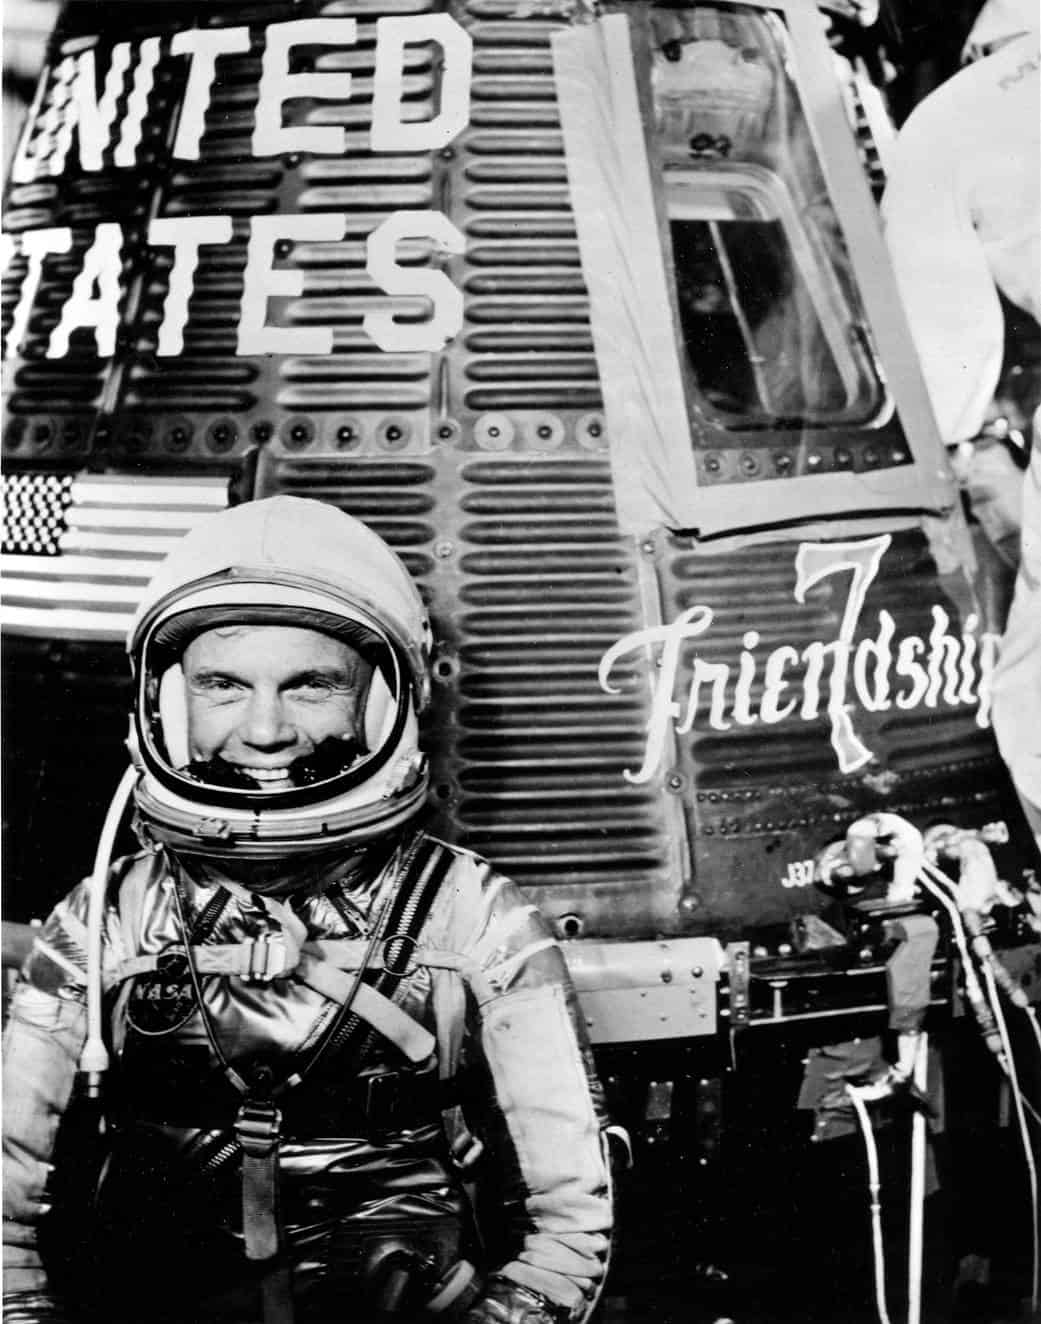 John-Glenn - Here’s The Radio Transmission of Astronaut John Glenn, after dozens of UFOs surround him in space